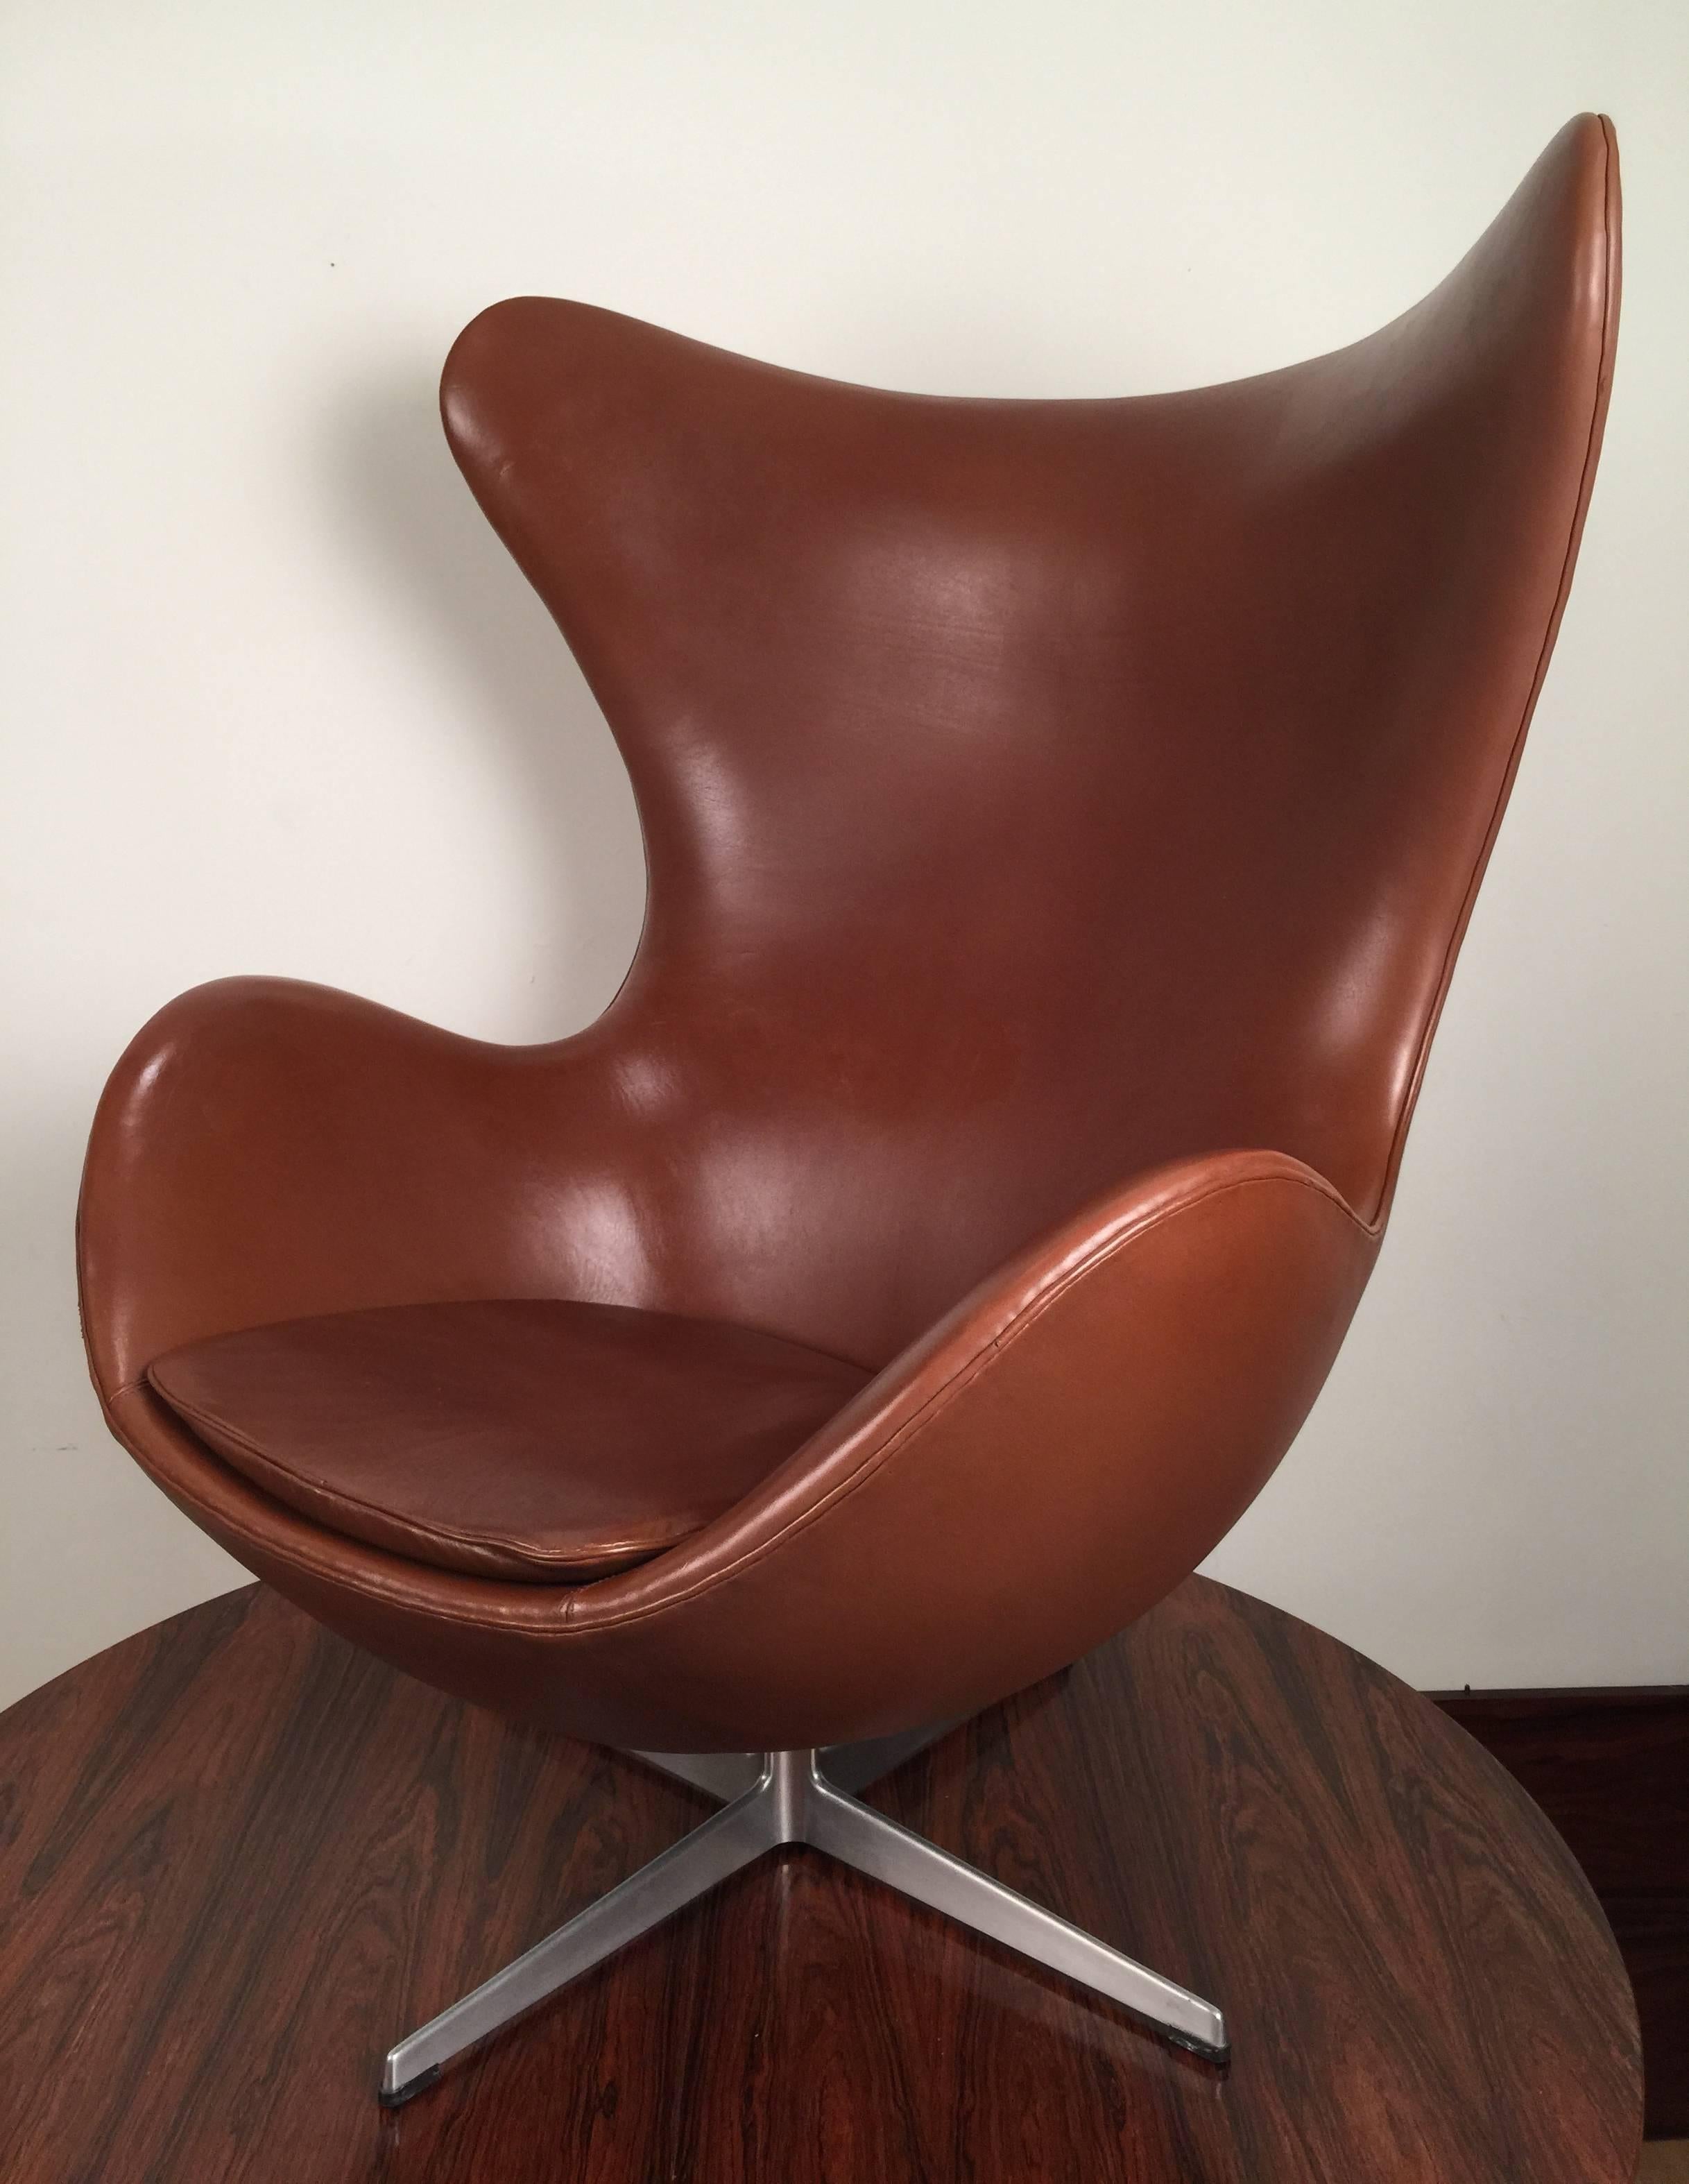 Italian Early Arne Jacobsen Egg Chair in Original Brown Leather by Fritz Hansen